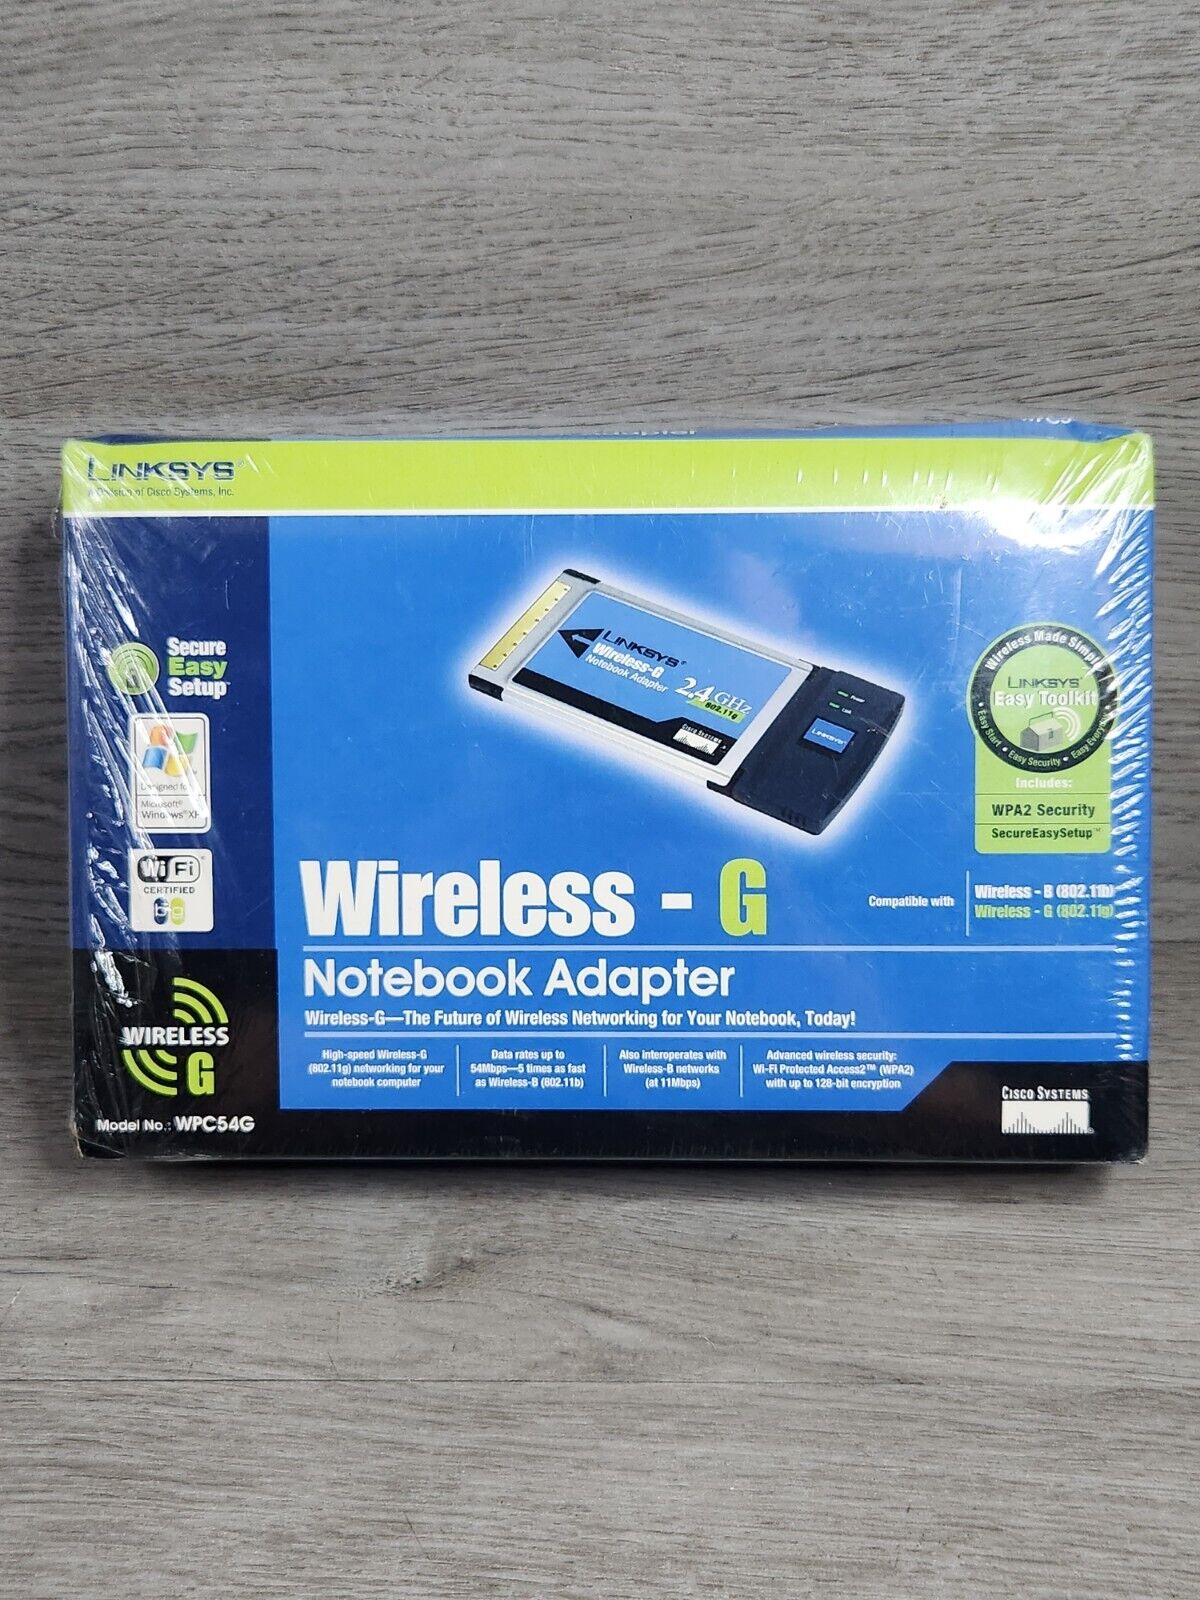 Linksys WRT54G 54 Mbps 4-Port 10/100 Wireless Notebook Adapter  